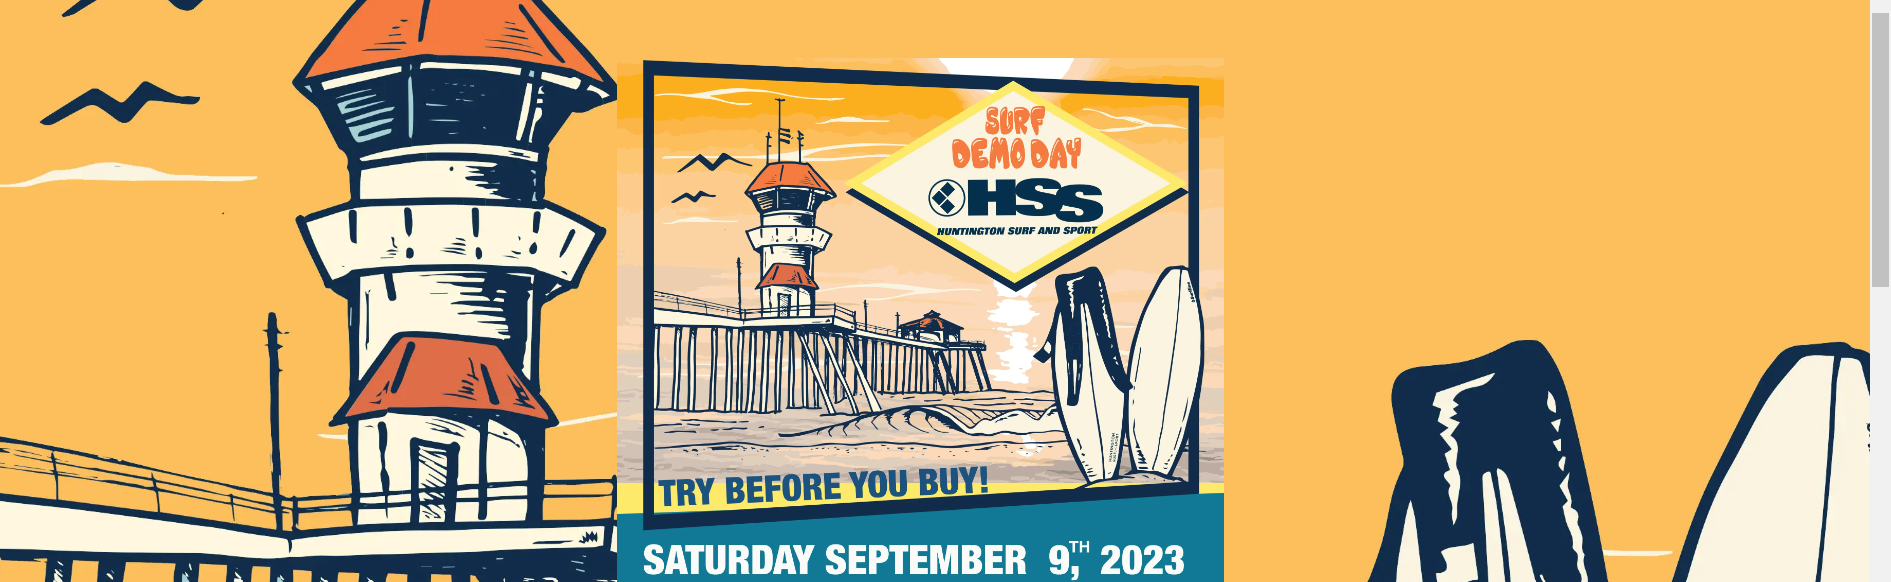 Surf Demo Day - Huntington Surf & Sport - September 9th